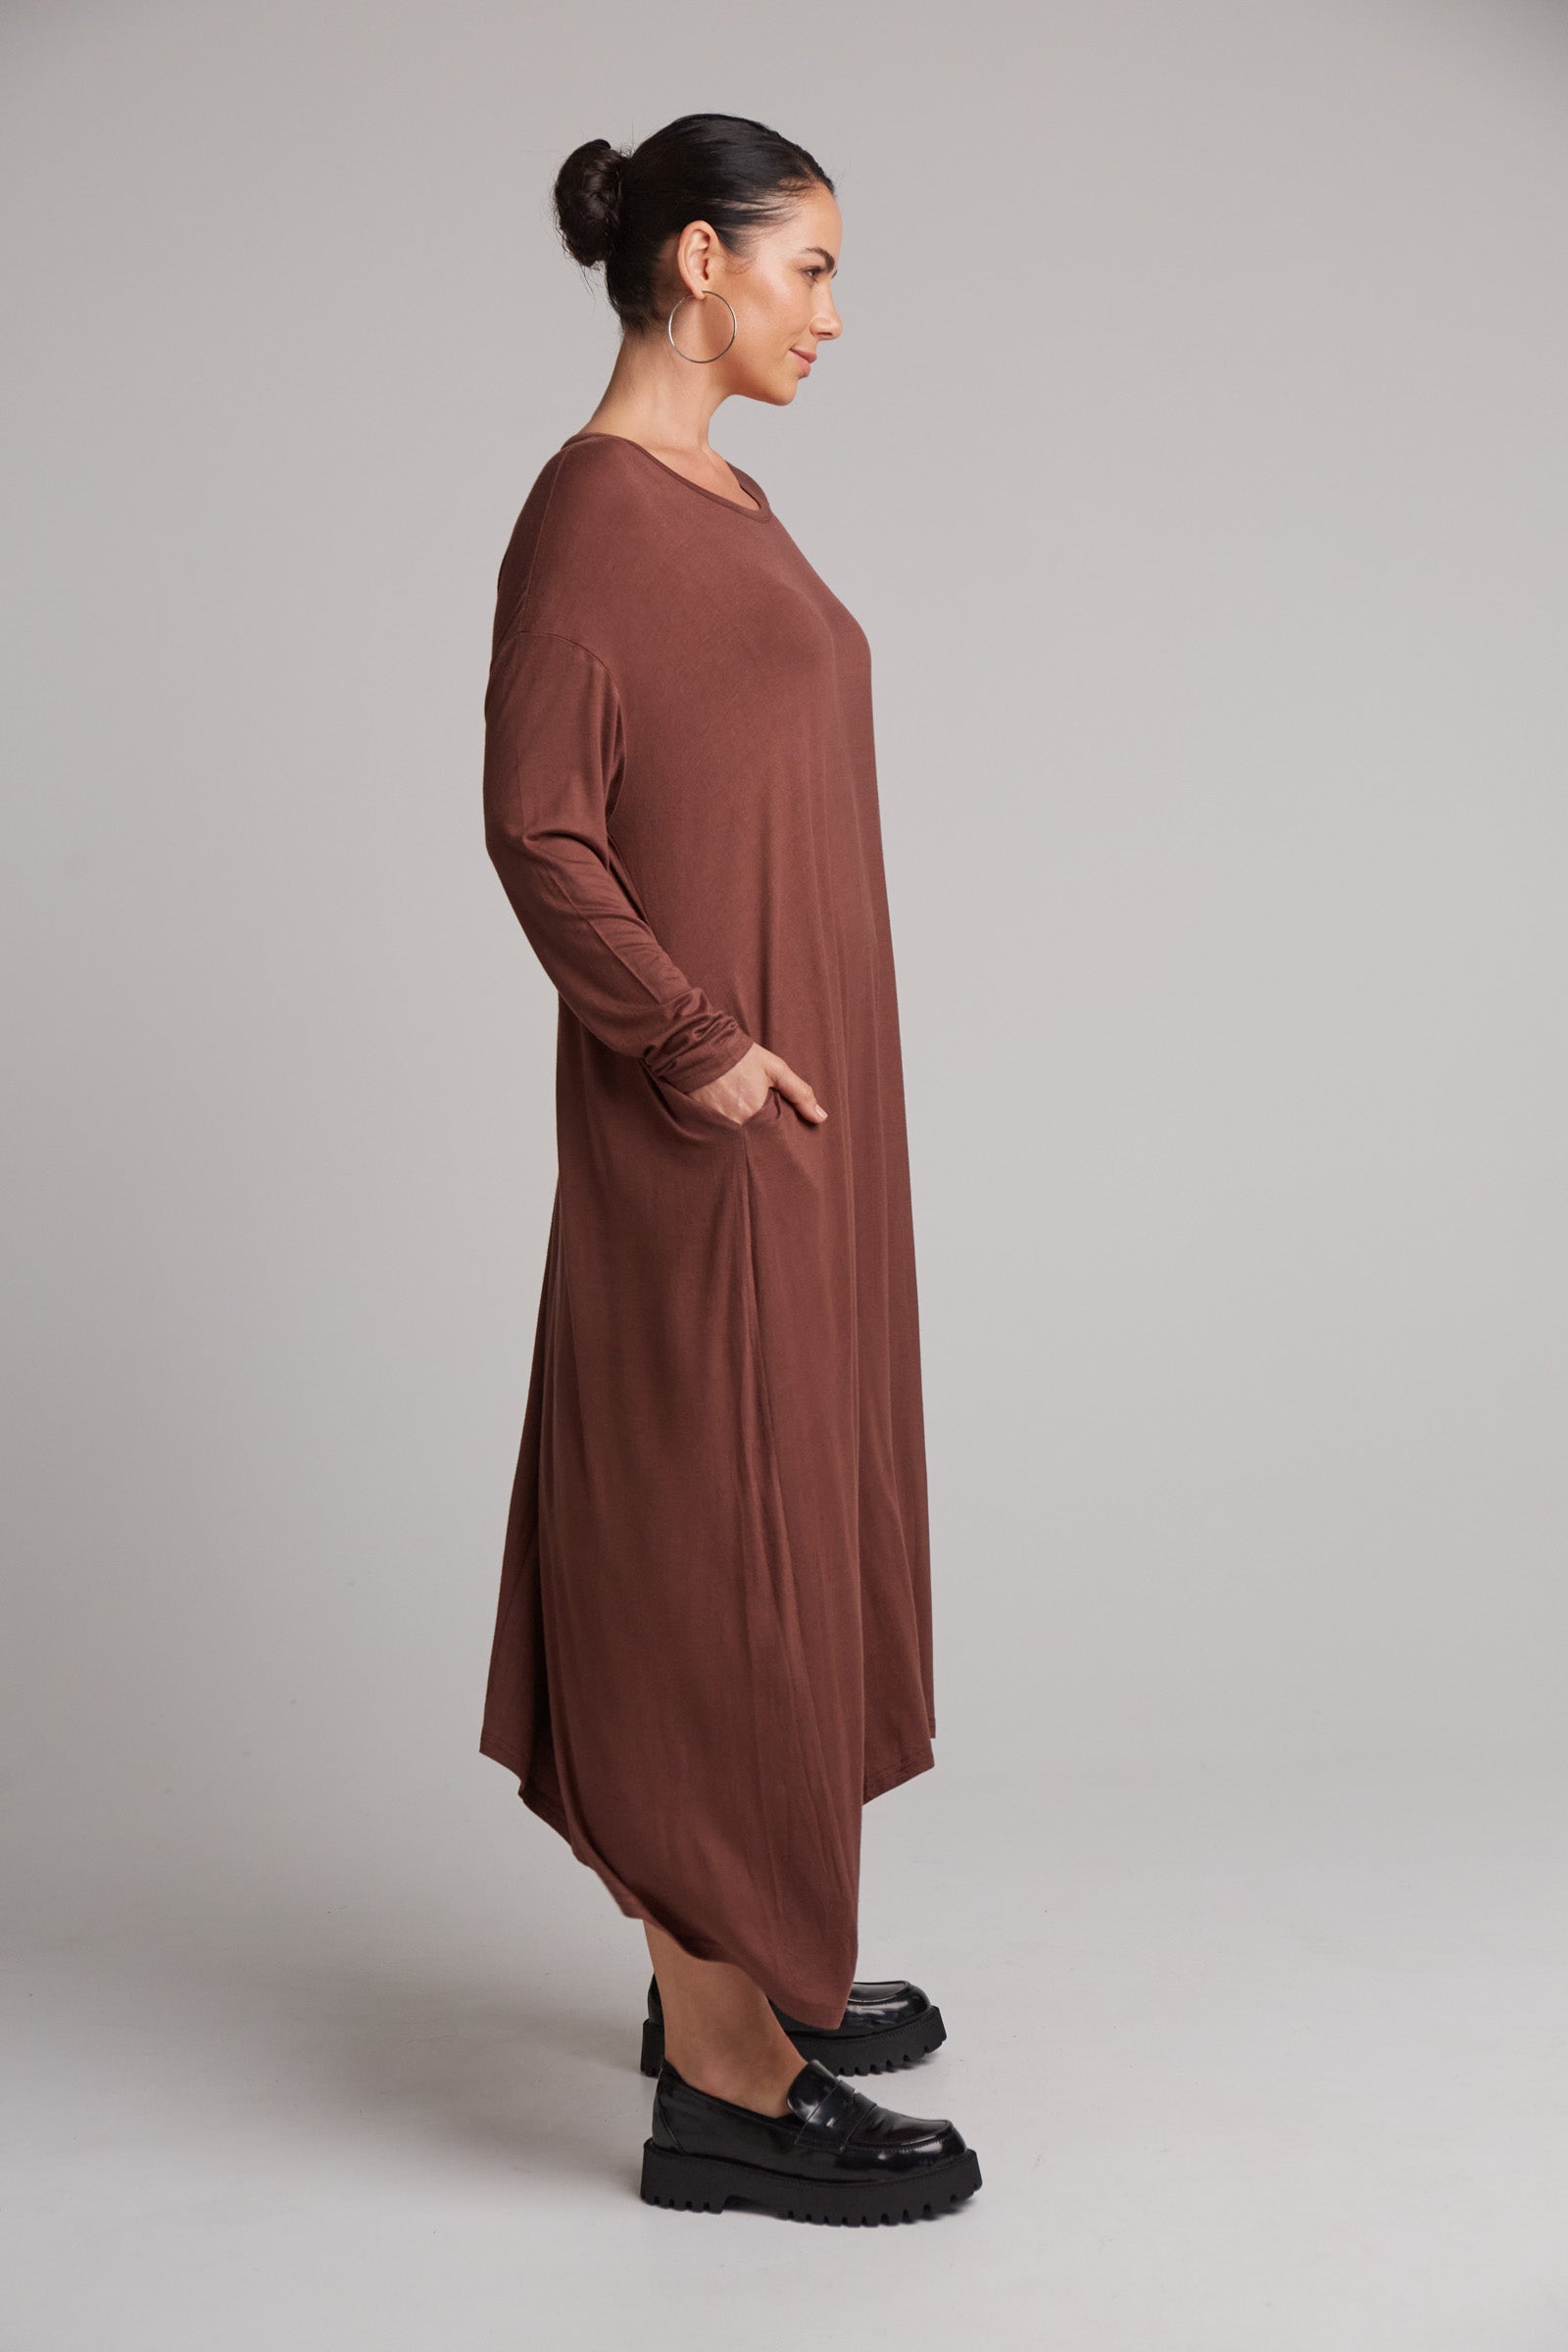 Studio Jersey Dress - Mocha - eb&ive Clothing - Dress Maxi